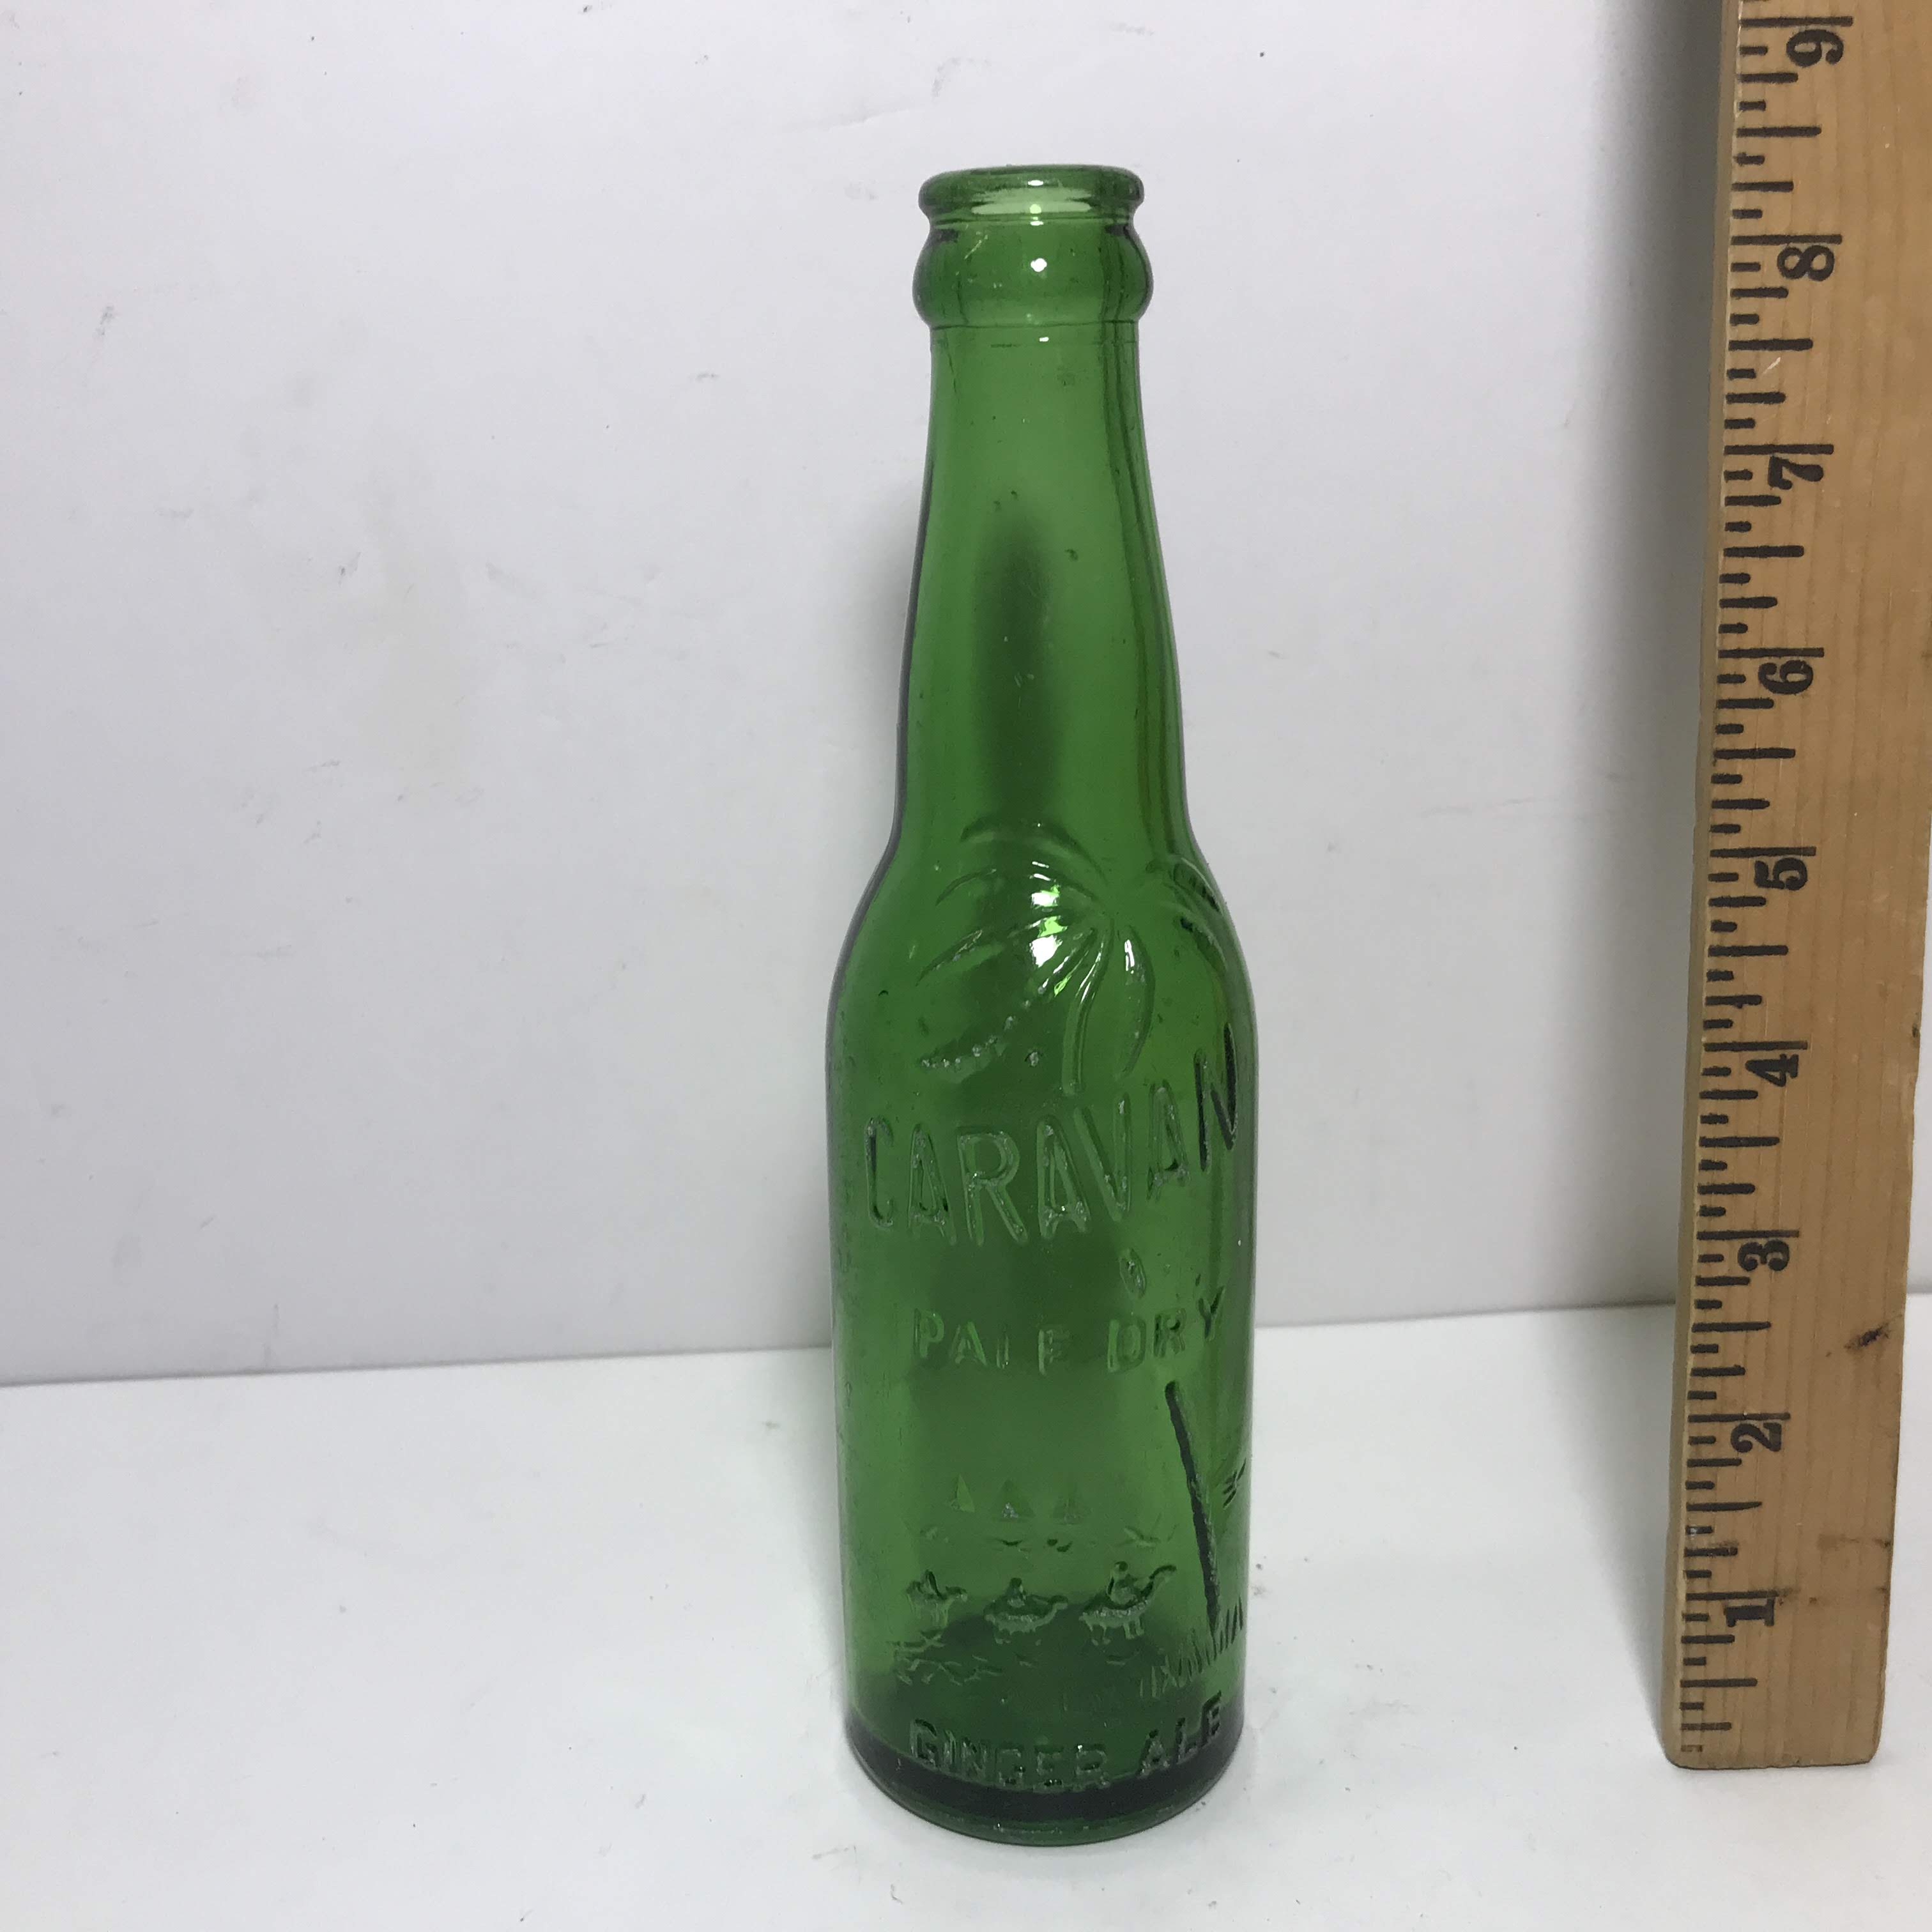 Green Glass Caravan Pale Dry Ginger Ale Bottle | Proxibid